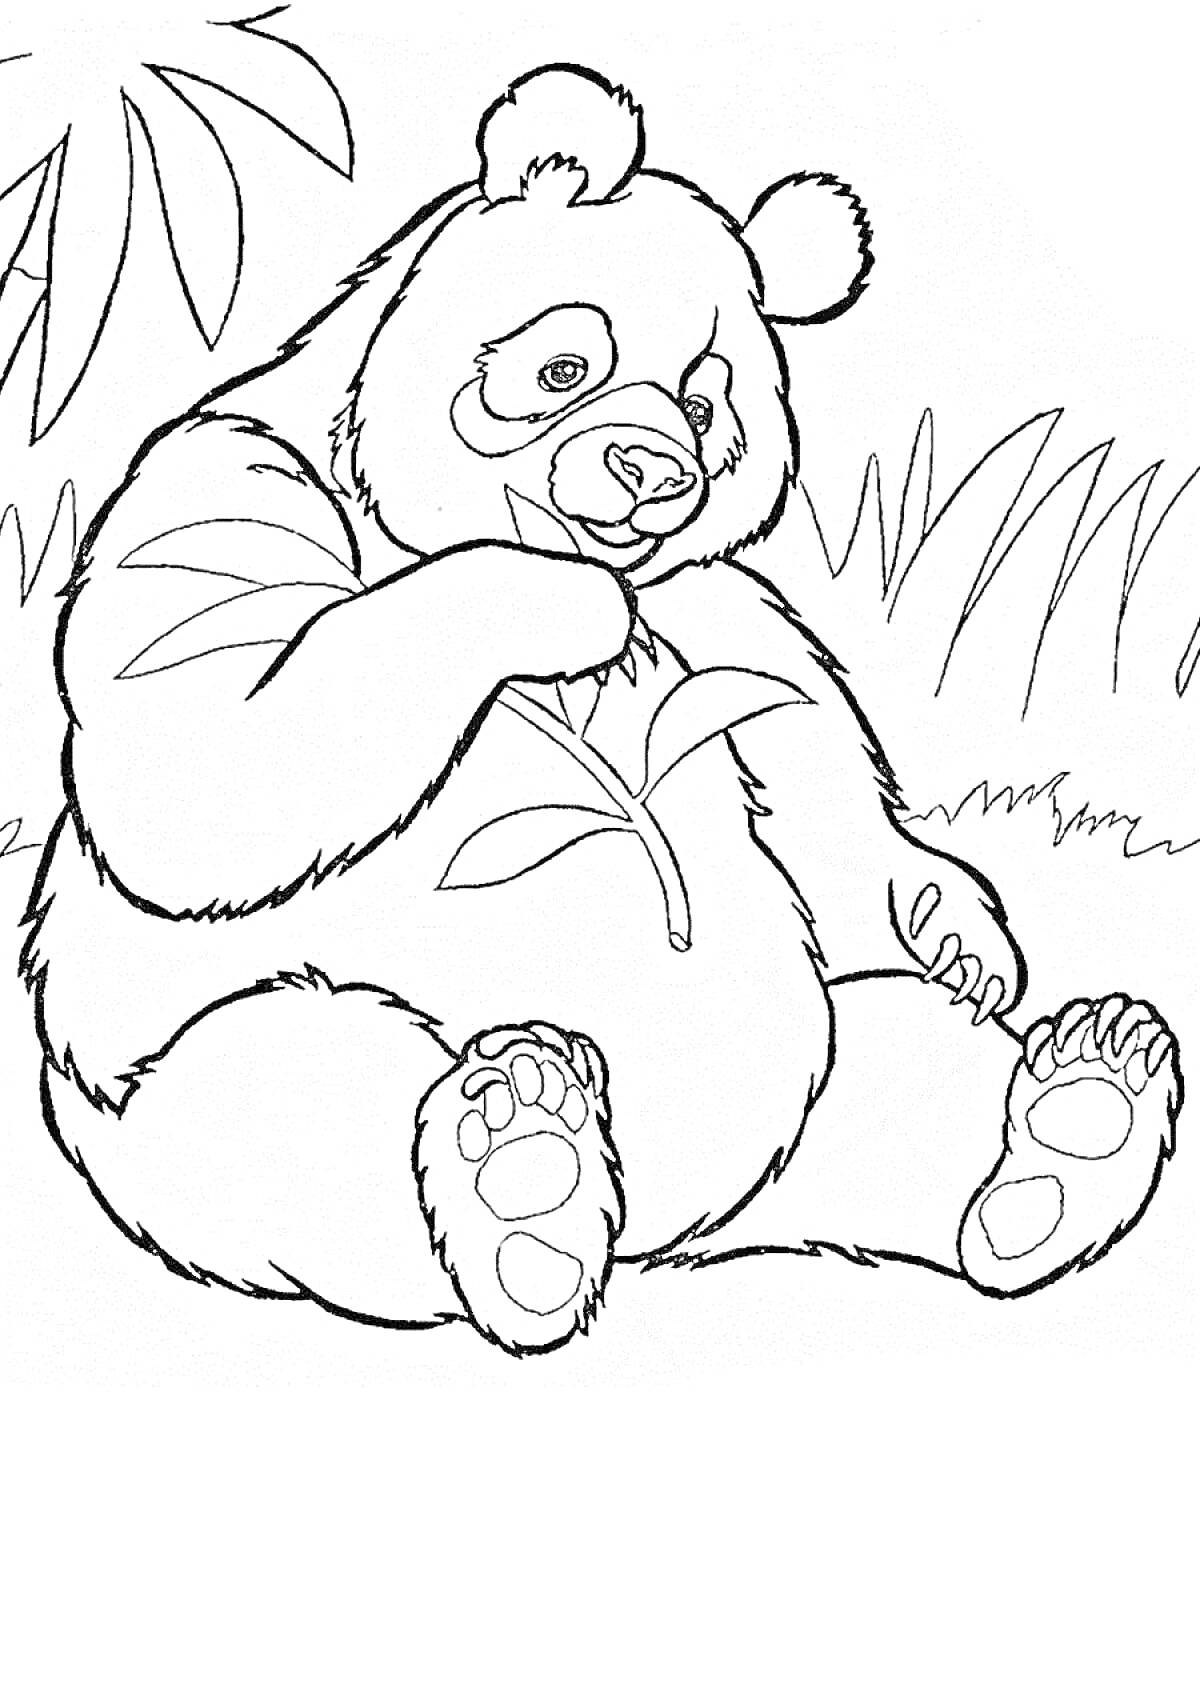 Раскраска Панда, сидящая среди травы и держащая бамбук